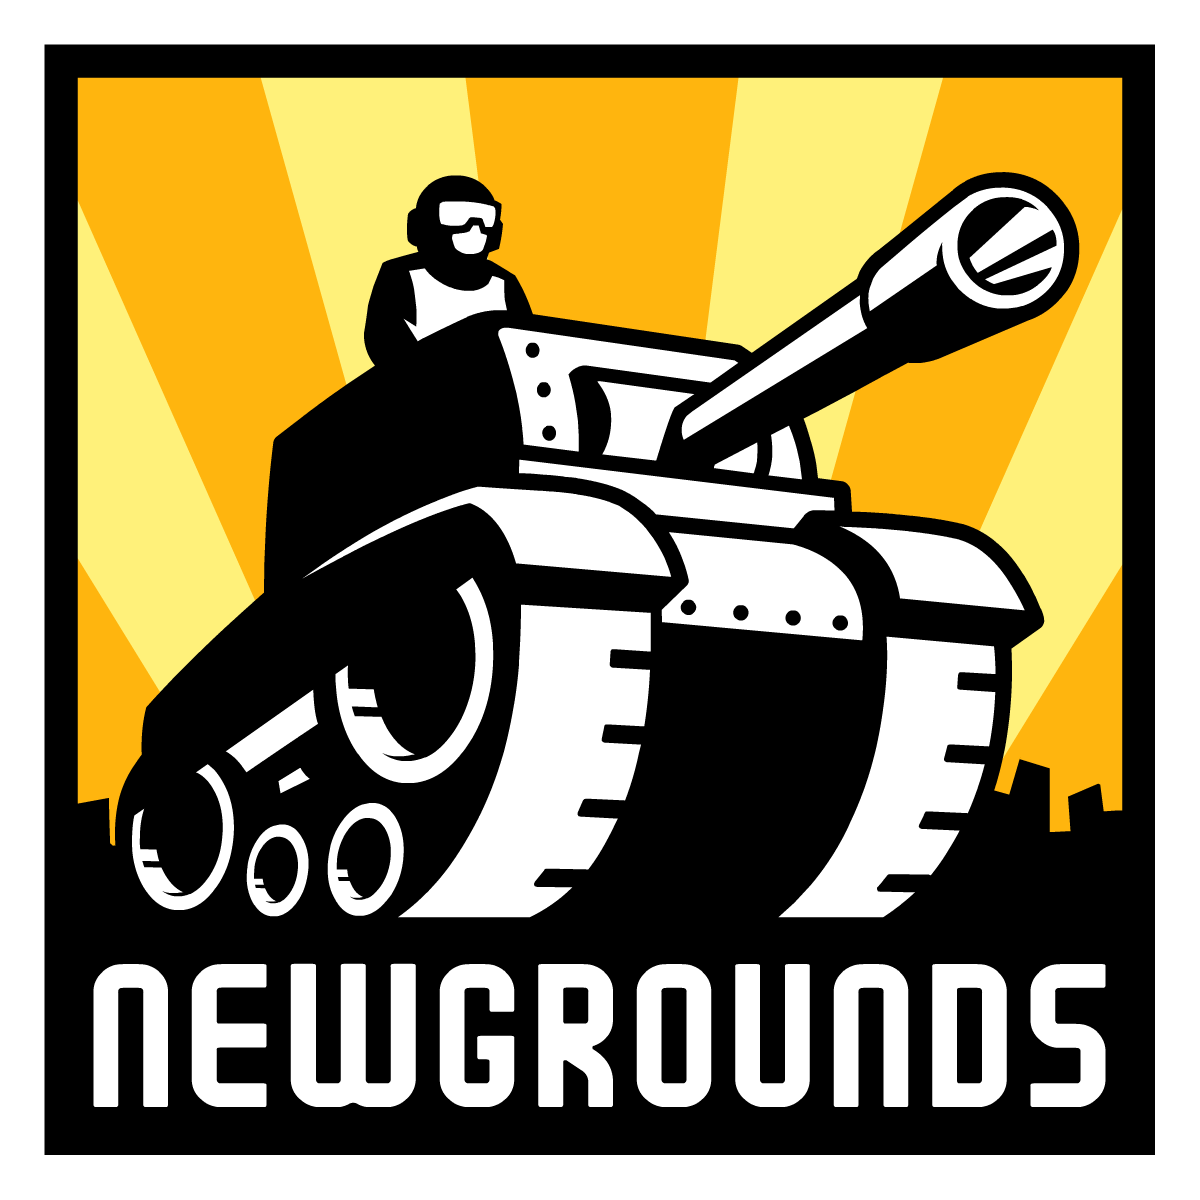 Newgeounds